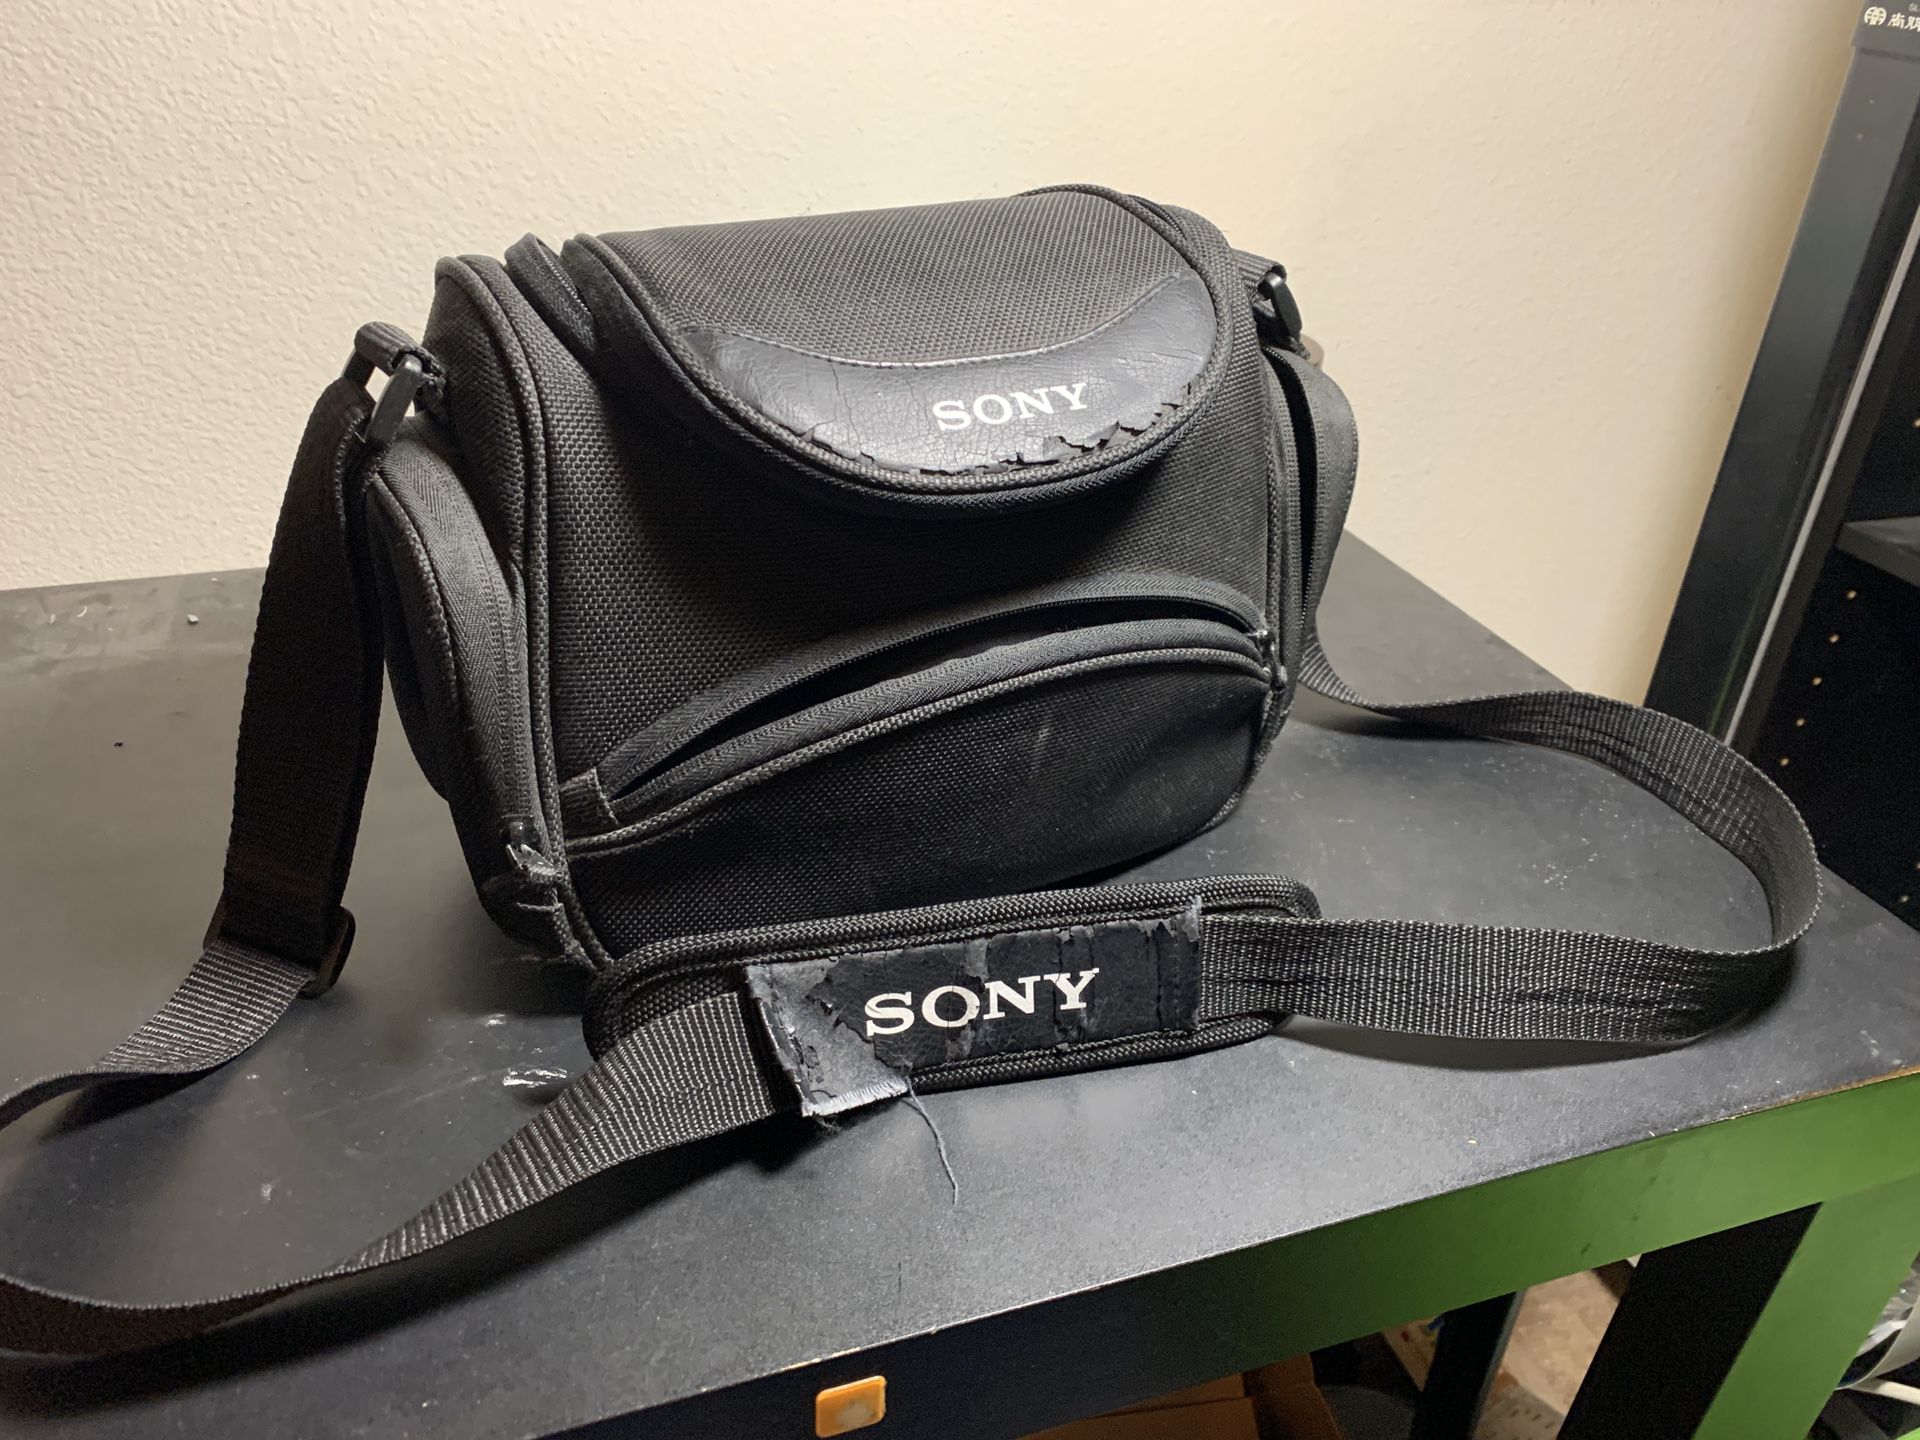 Sony camera bag